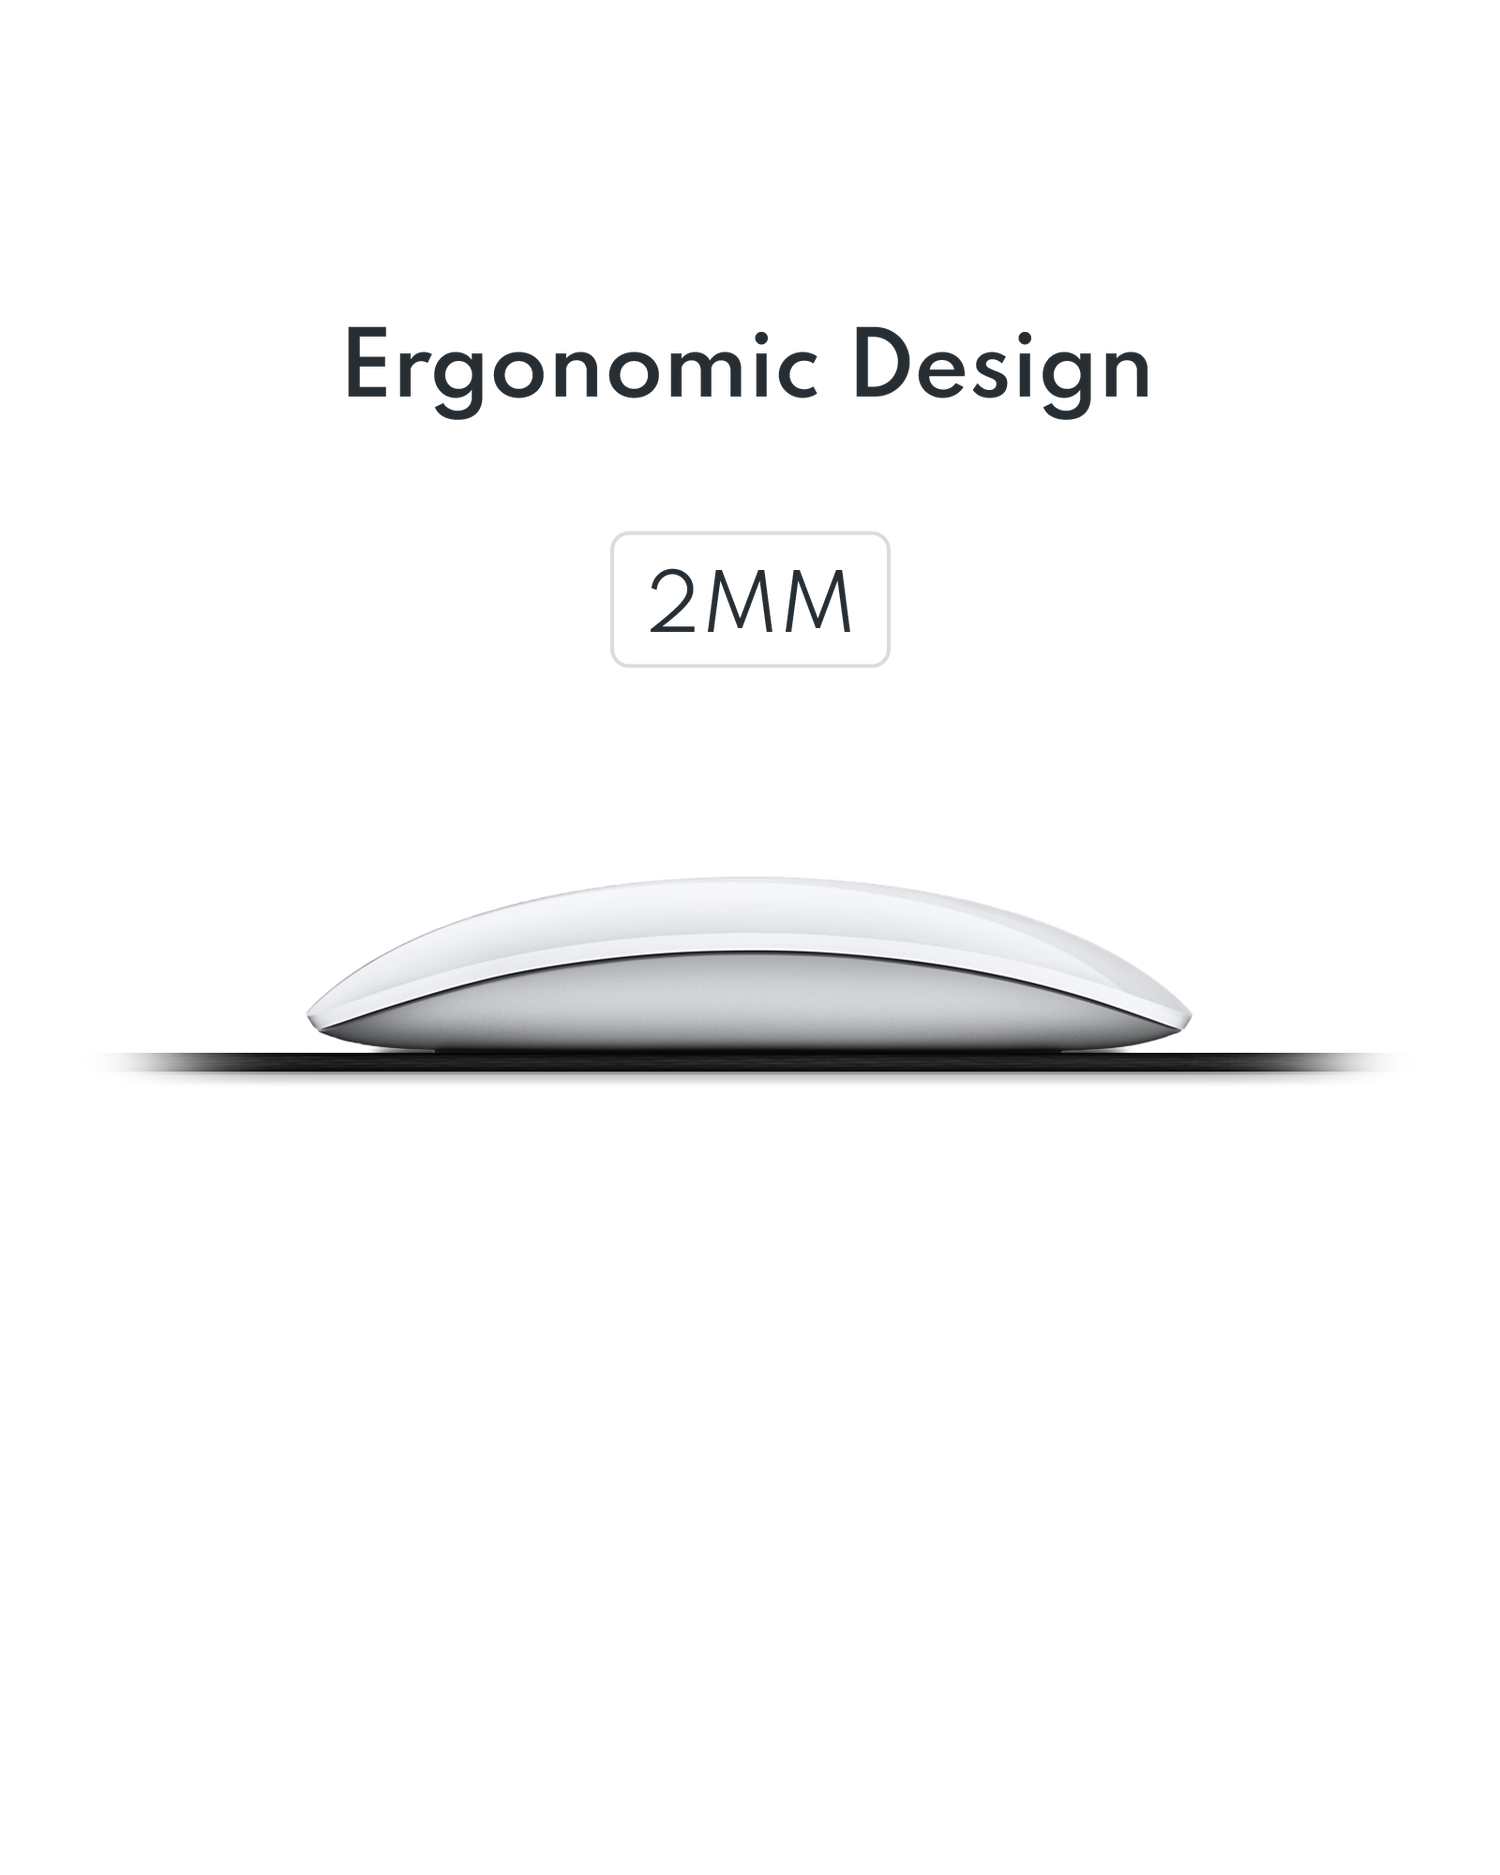 Mouse Pad with Ergonomic Design